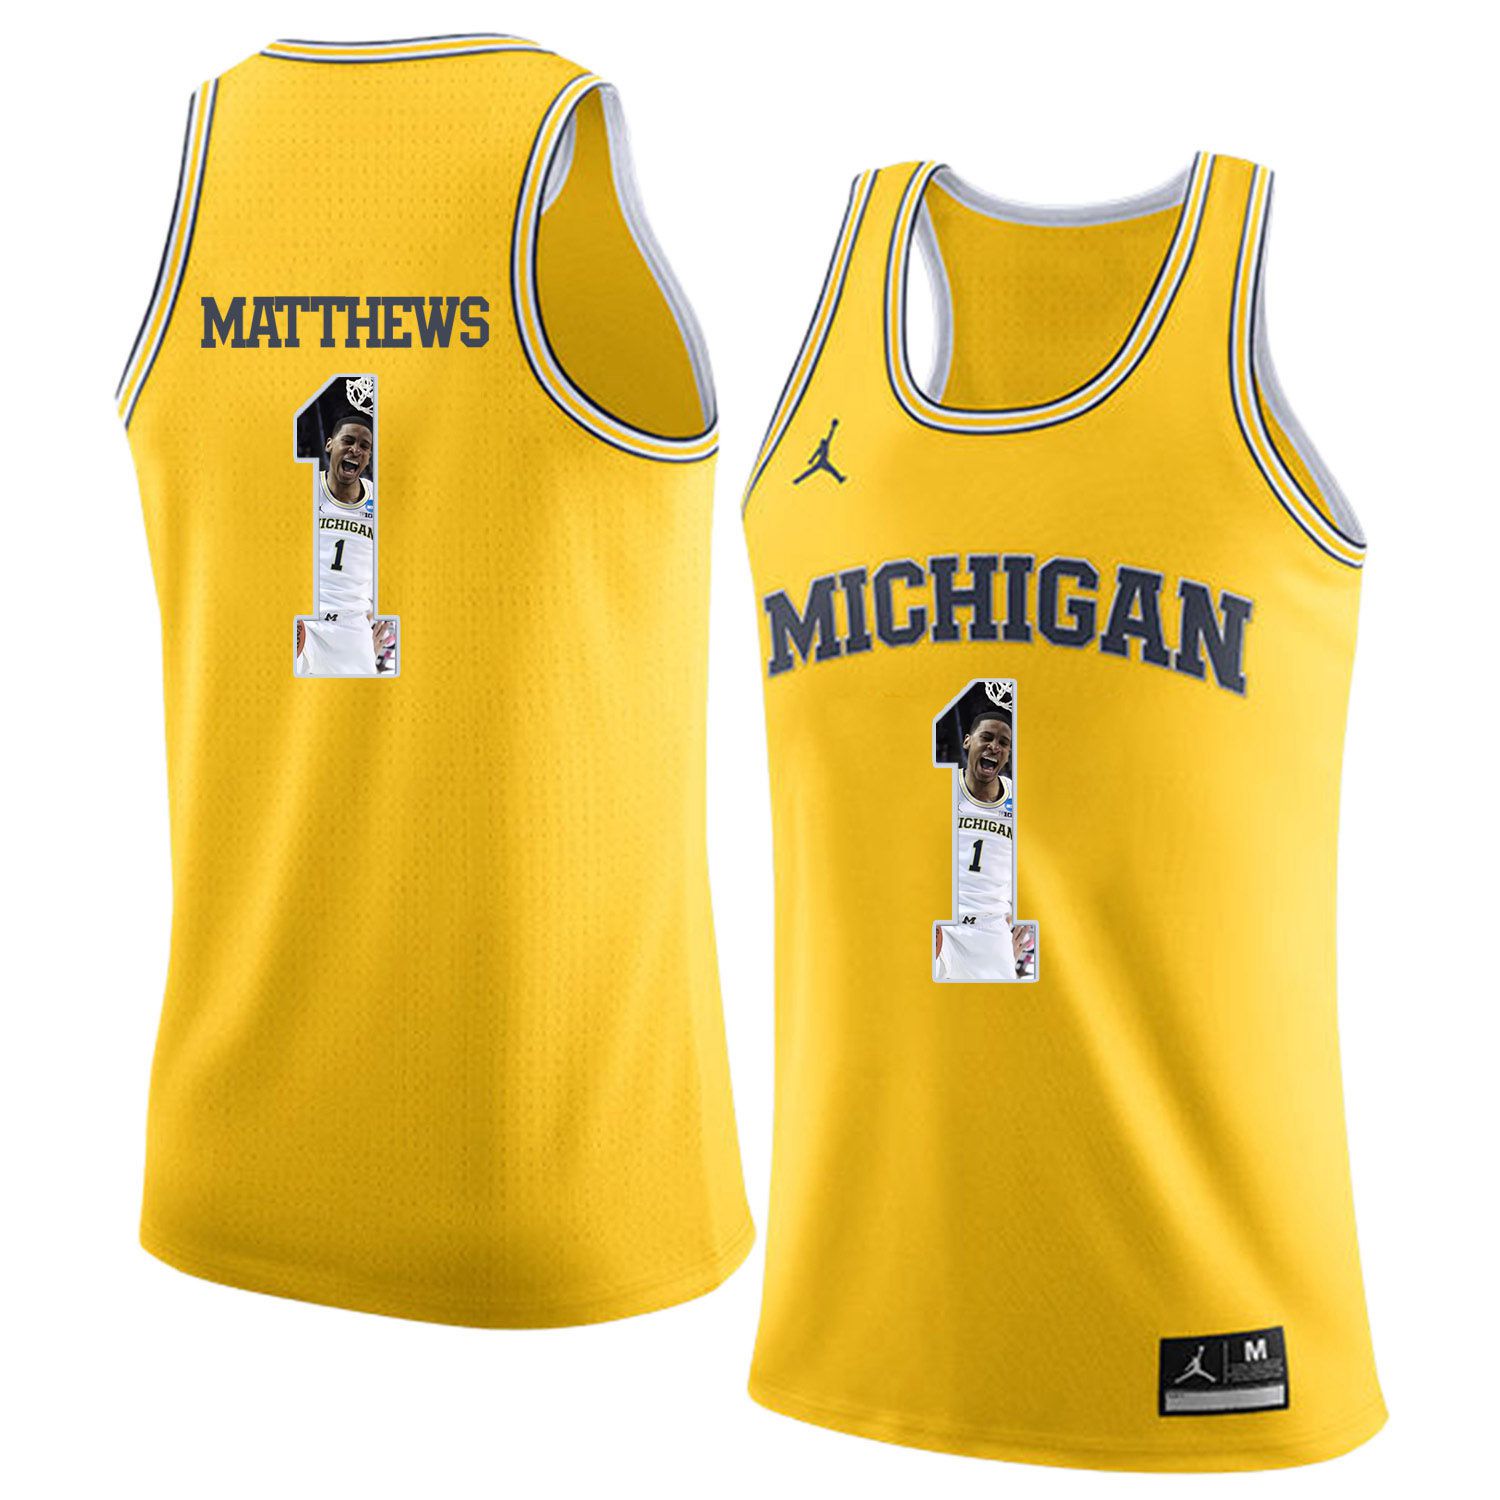 Men Jordan University of Michigan Basketball Yellow 1 Matthews Fashion Edition Customized NCAA Jerseys